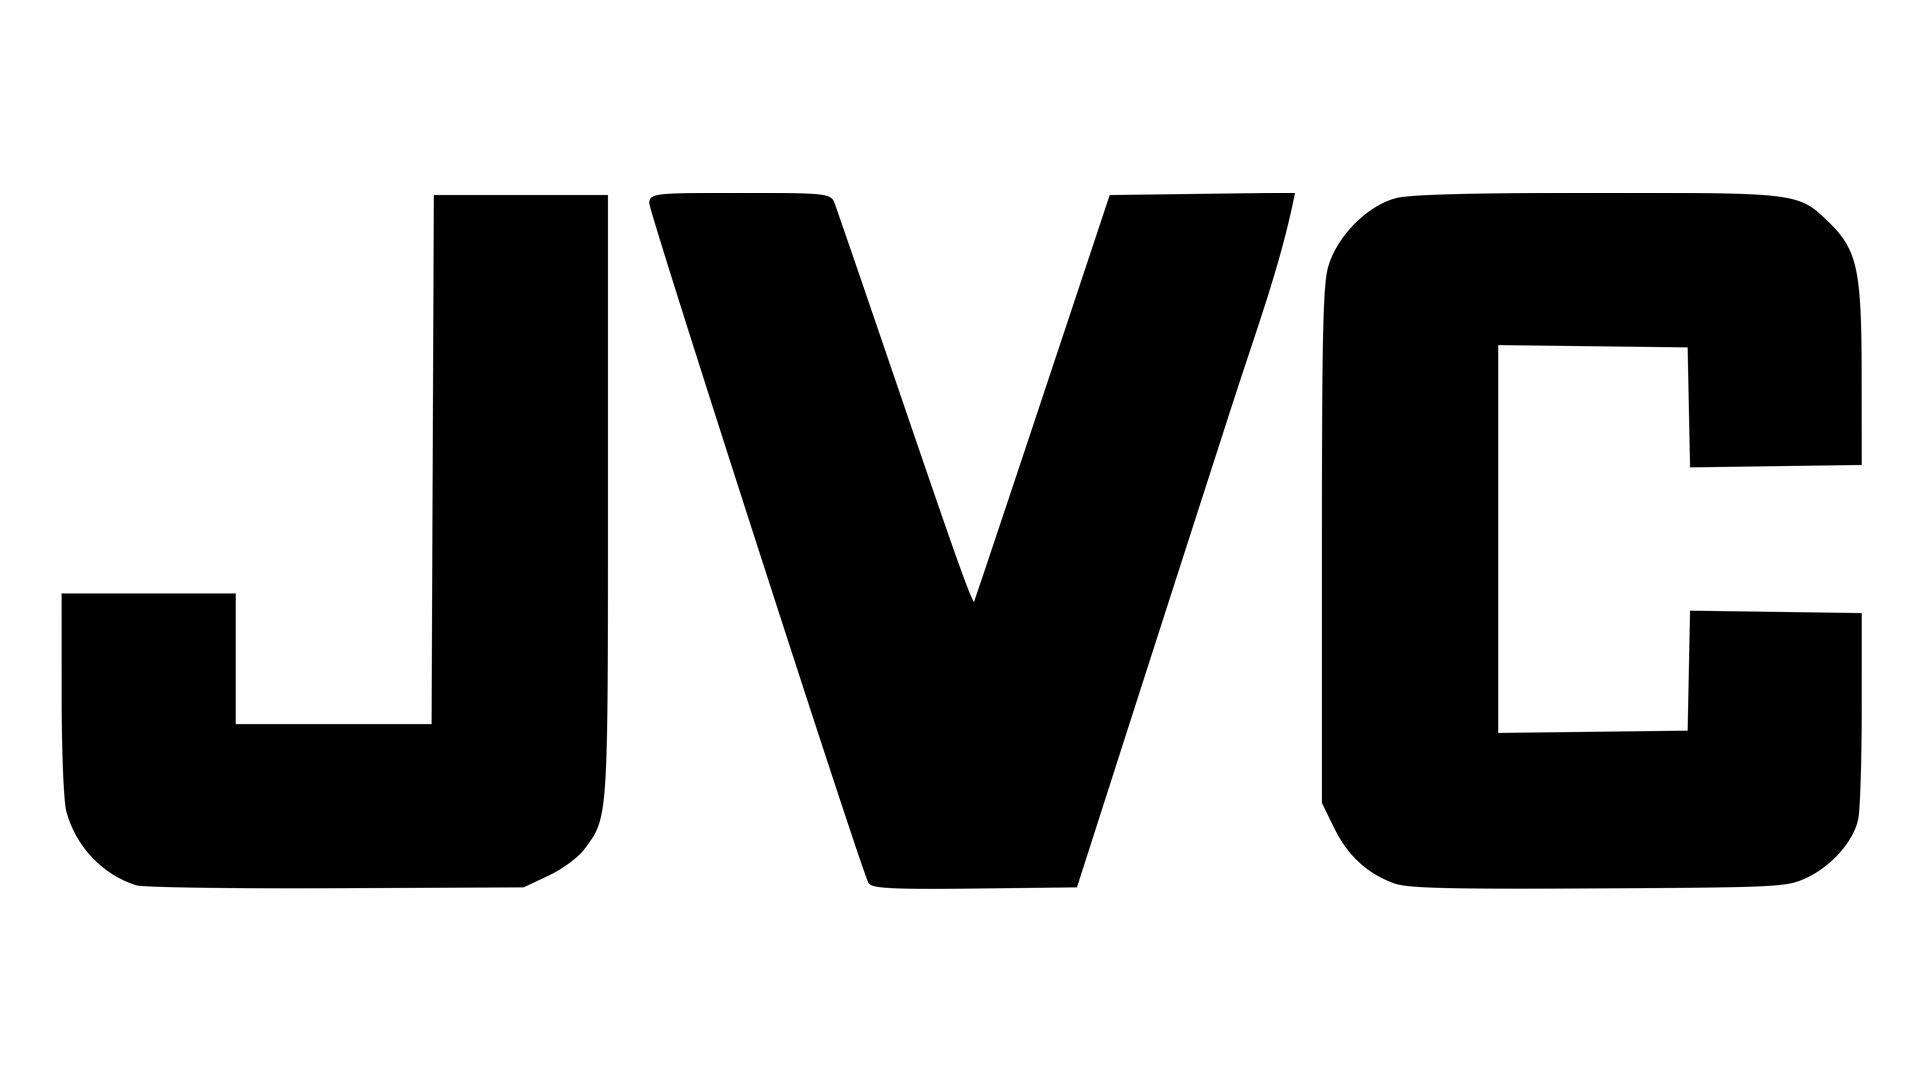 JVC Logo - JVC Logo, JVC Symbol, Meaning, History and Evolution